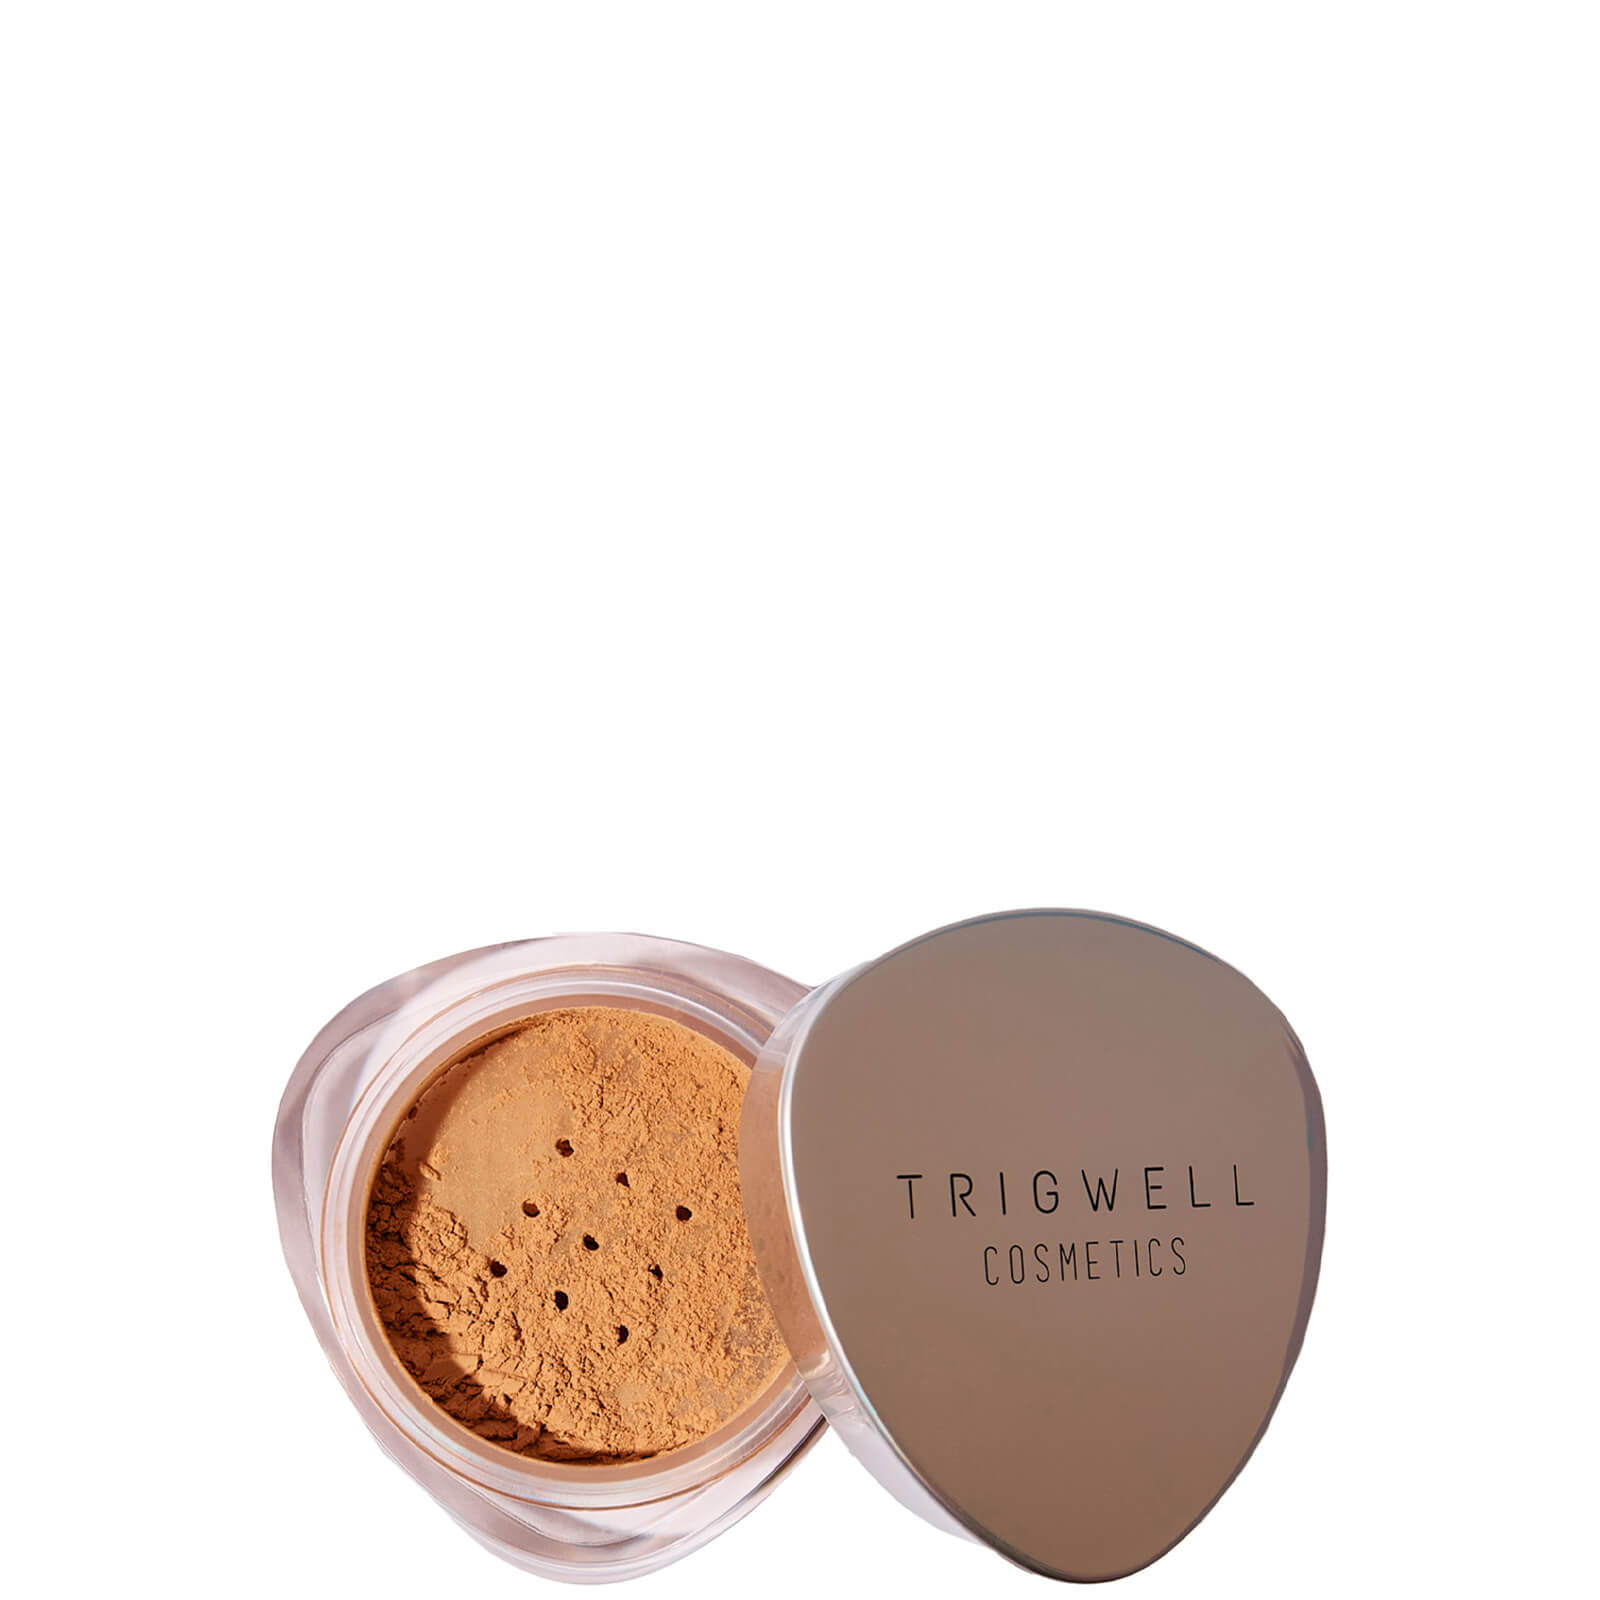 Trigwell Cosmetics Velvet Setting Powder 8g (various Shades) - Shade 8 In White